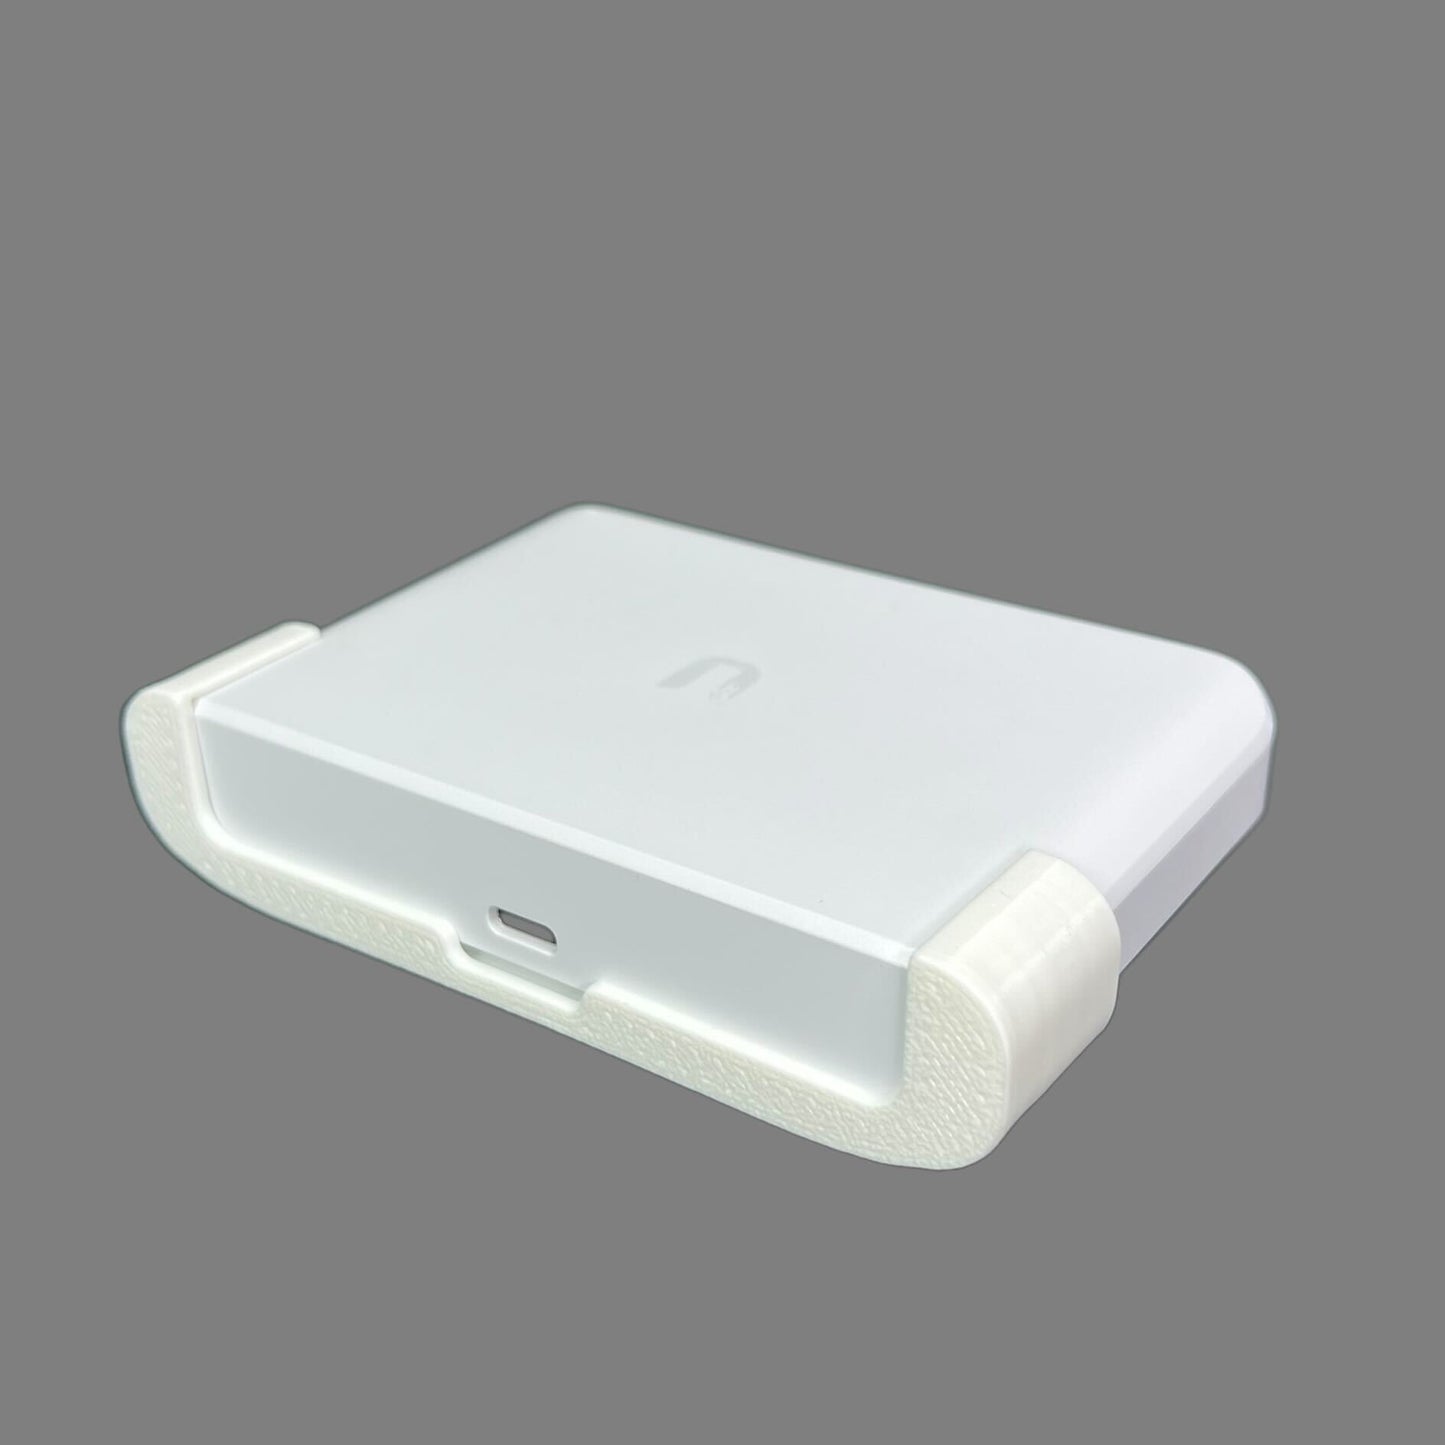 Unifi Flex Mini POE Driven Switch Wall Mounting Bracket